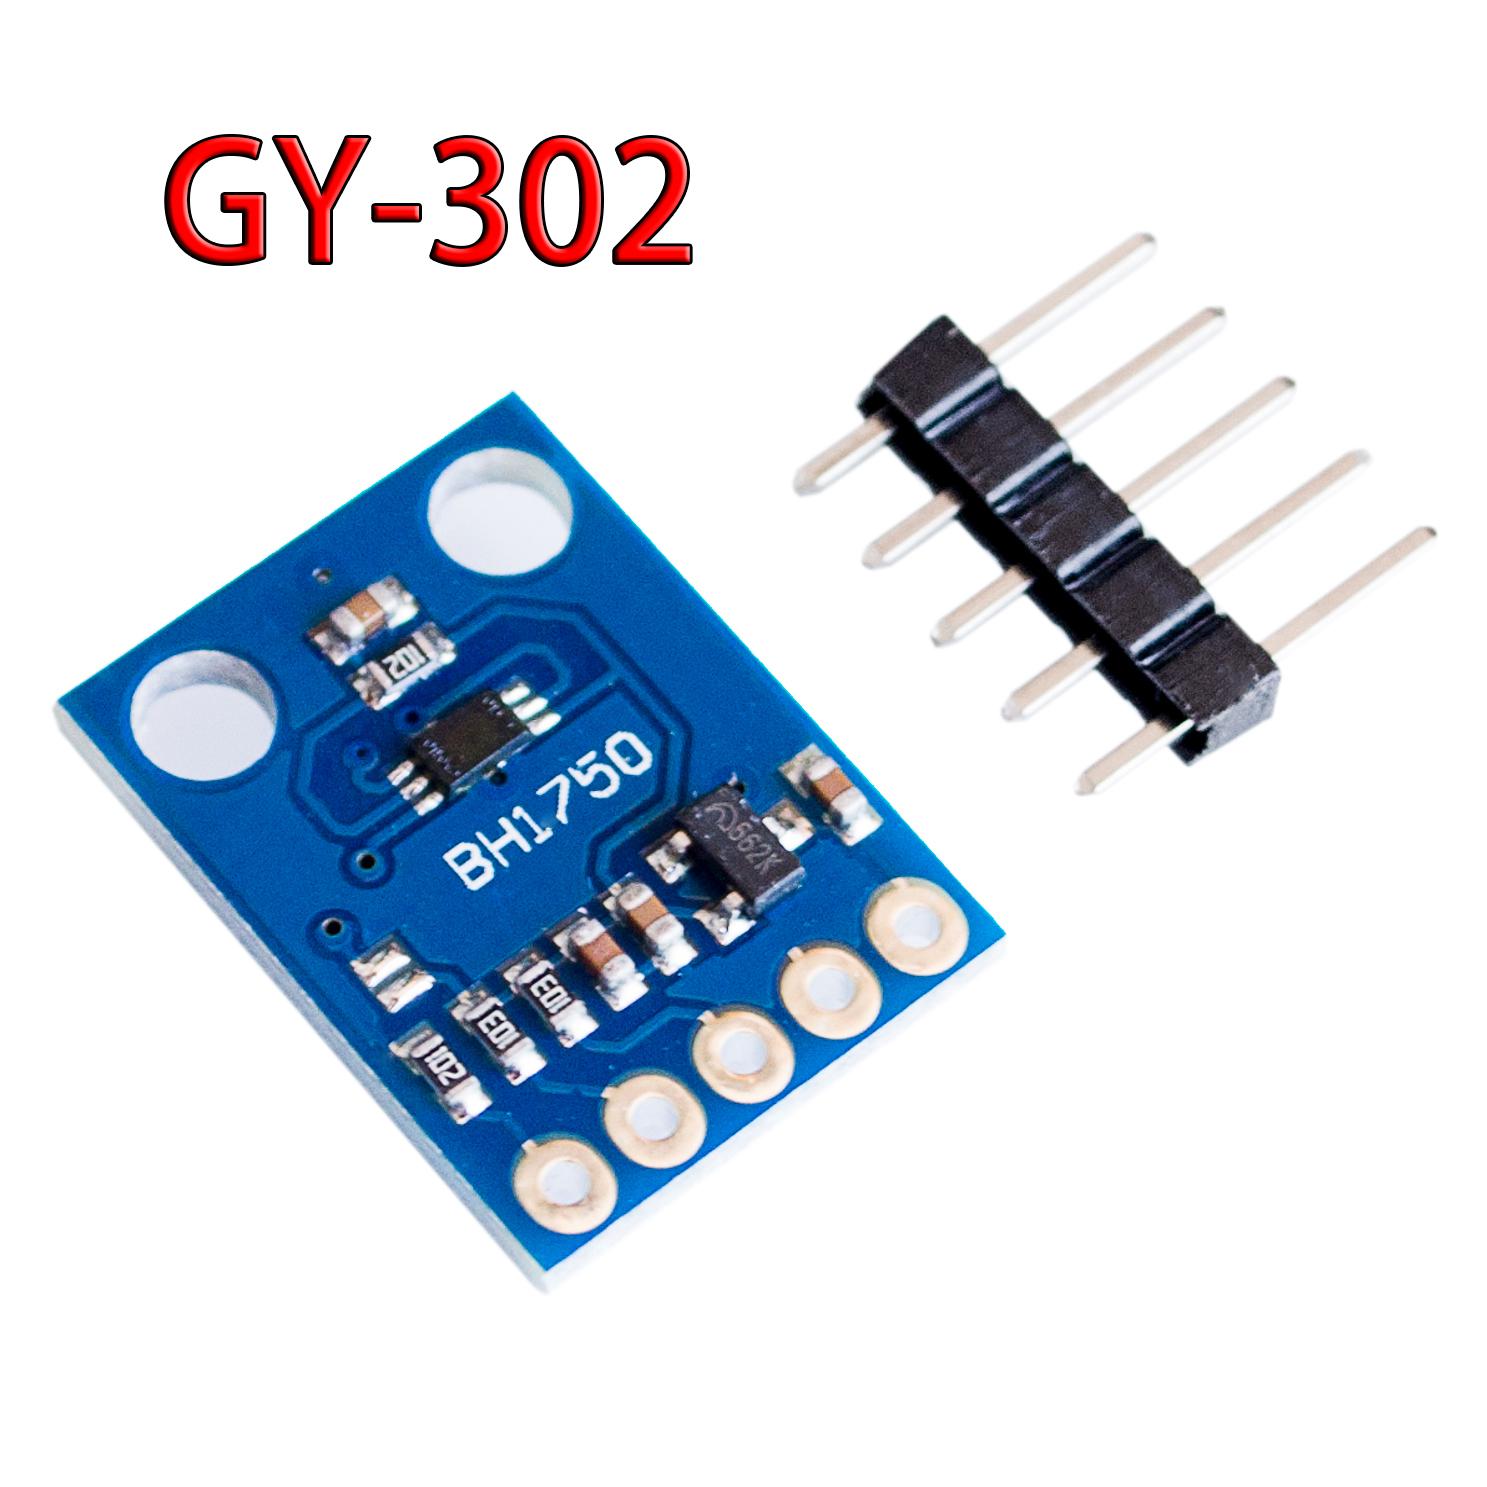 GY-30 GY-302 BH1750 BH1750FVI light intensity illumination module 3V-5V for Arduino